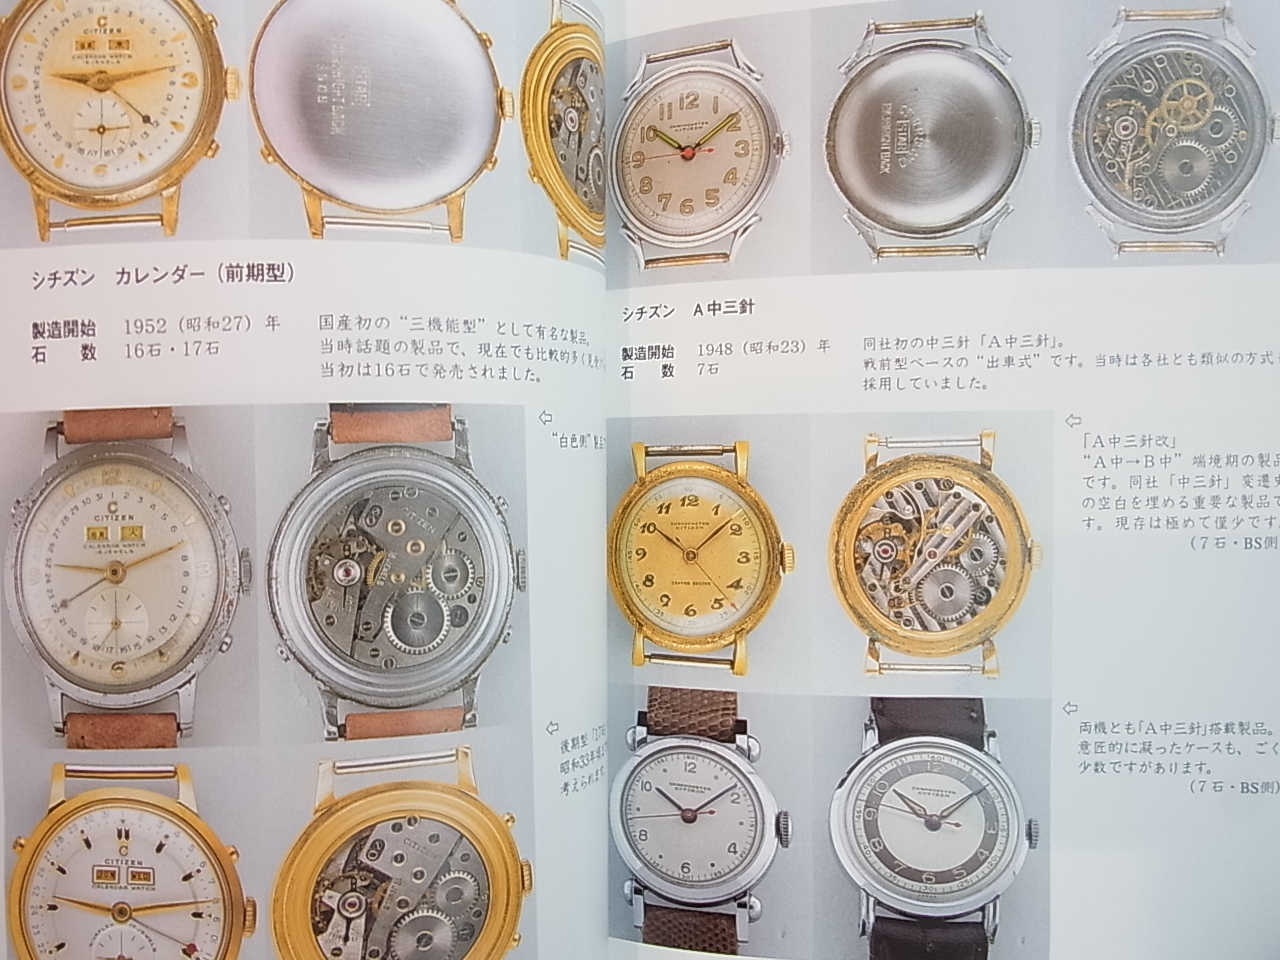 M49] トンボ出版 国産腕時計⑫”戦前・戦後編”